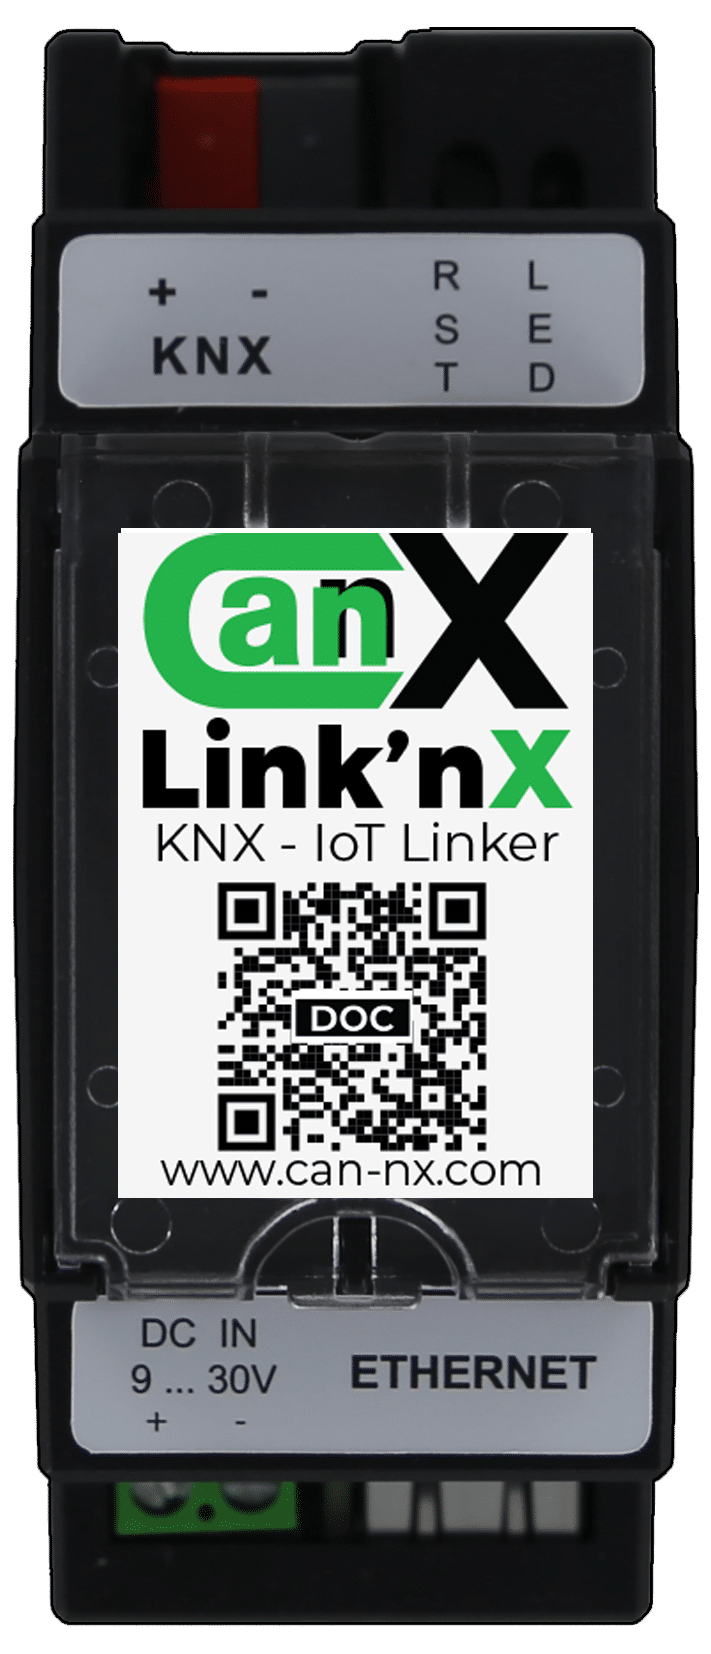 Linknx product image